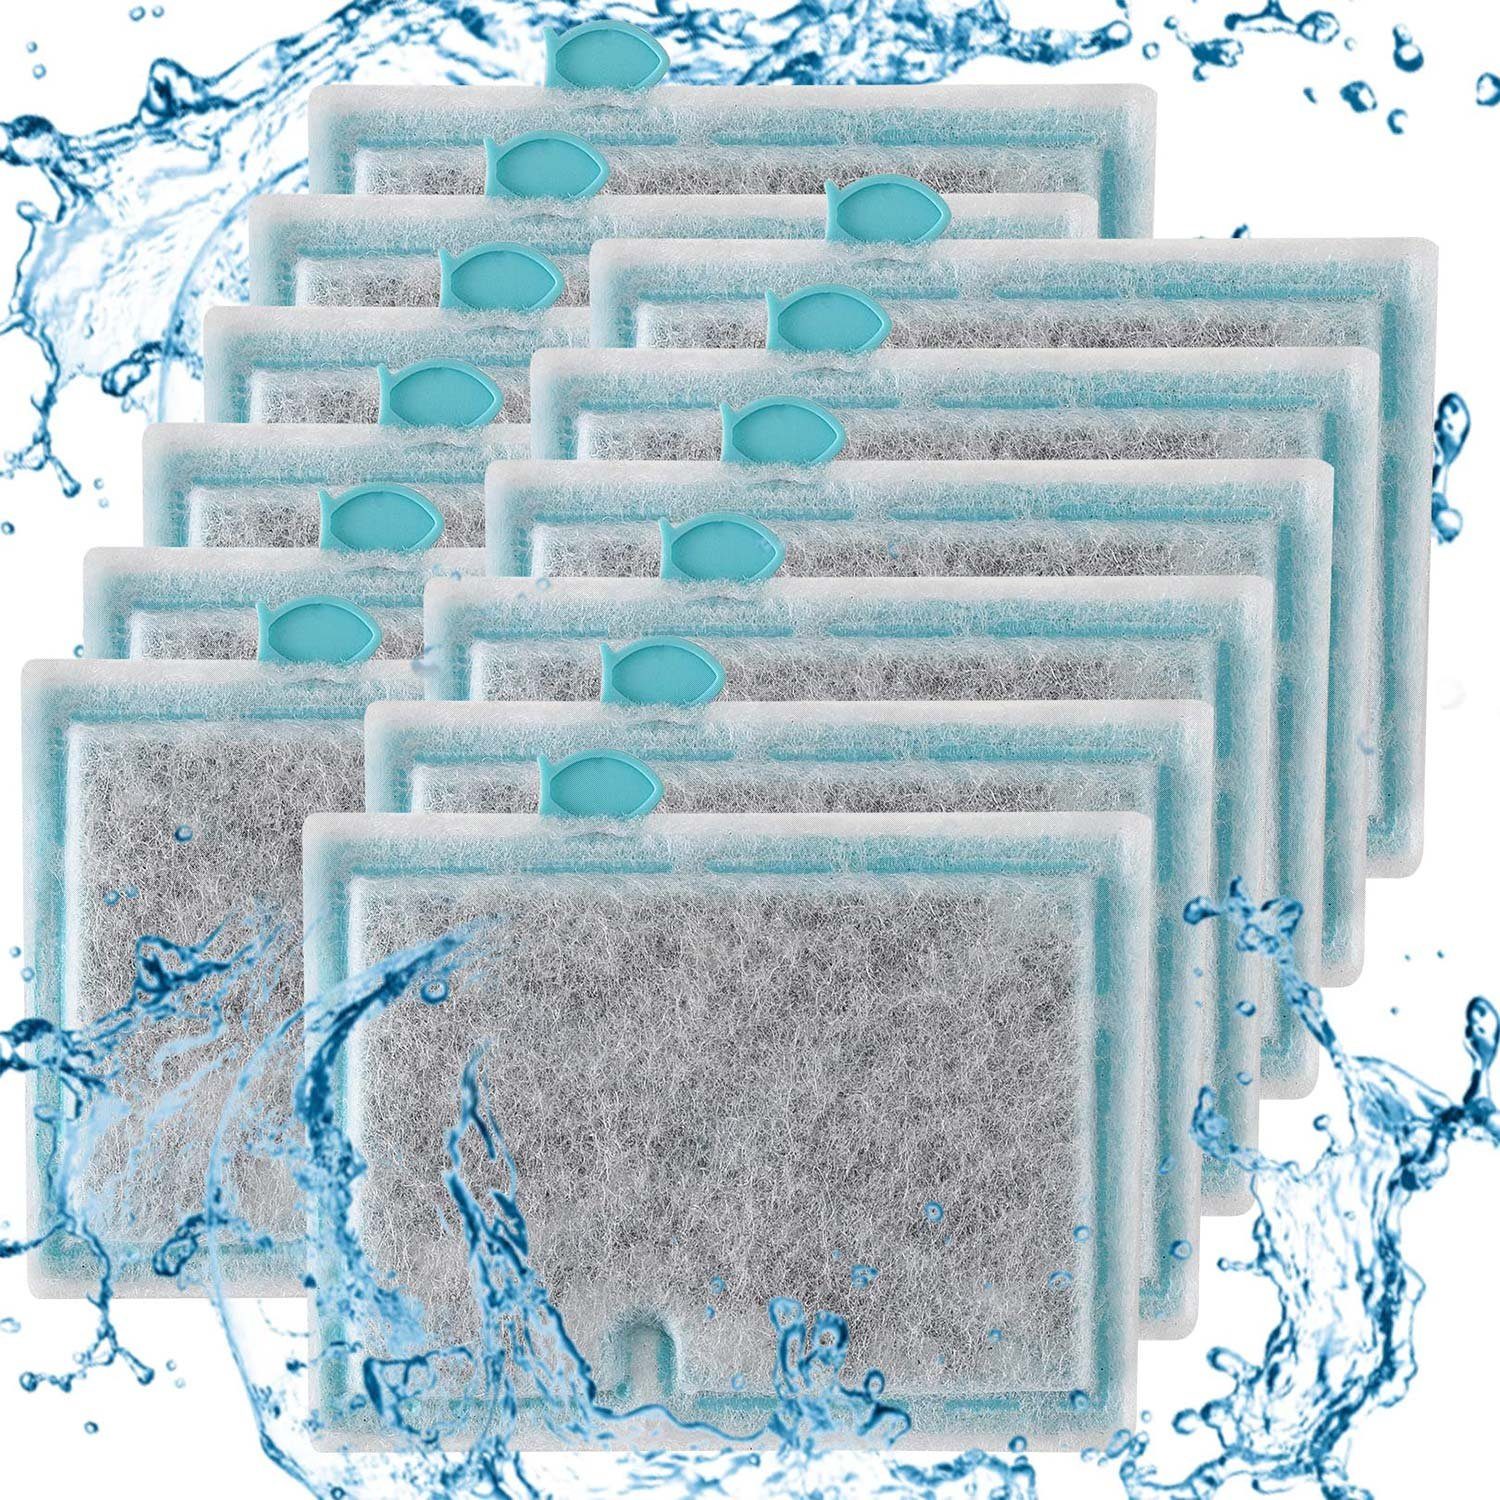 Daisred Aquariumpflege Aquarien Filterkartuschen Filter Wasserquellen Reinigen(12-tlg)